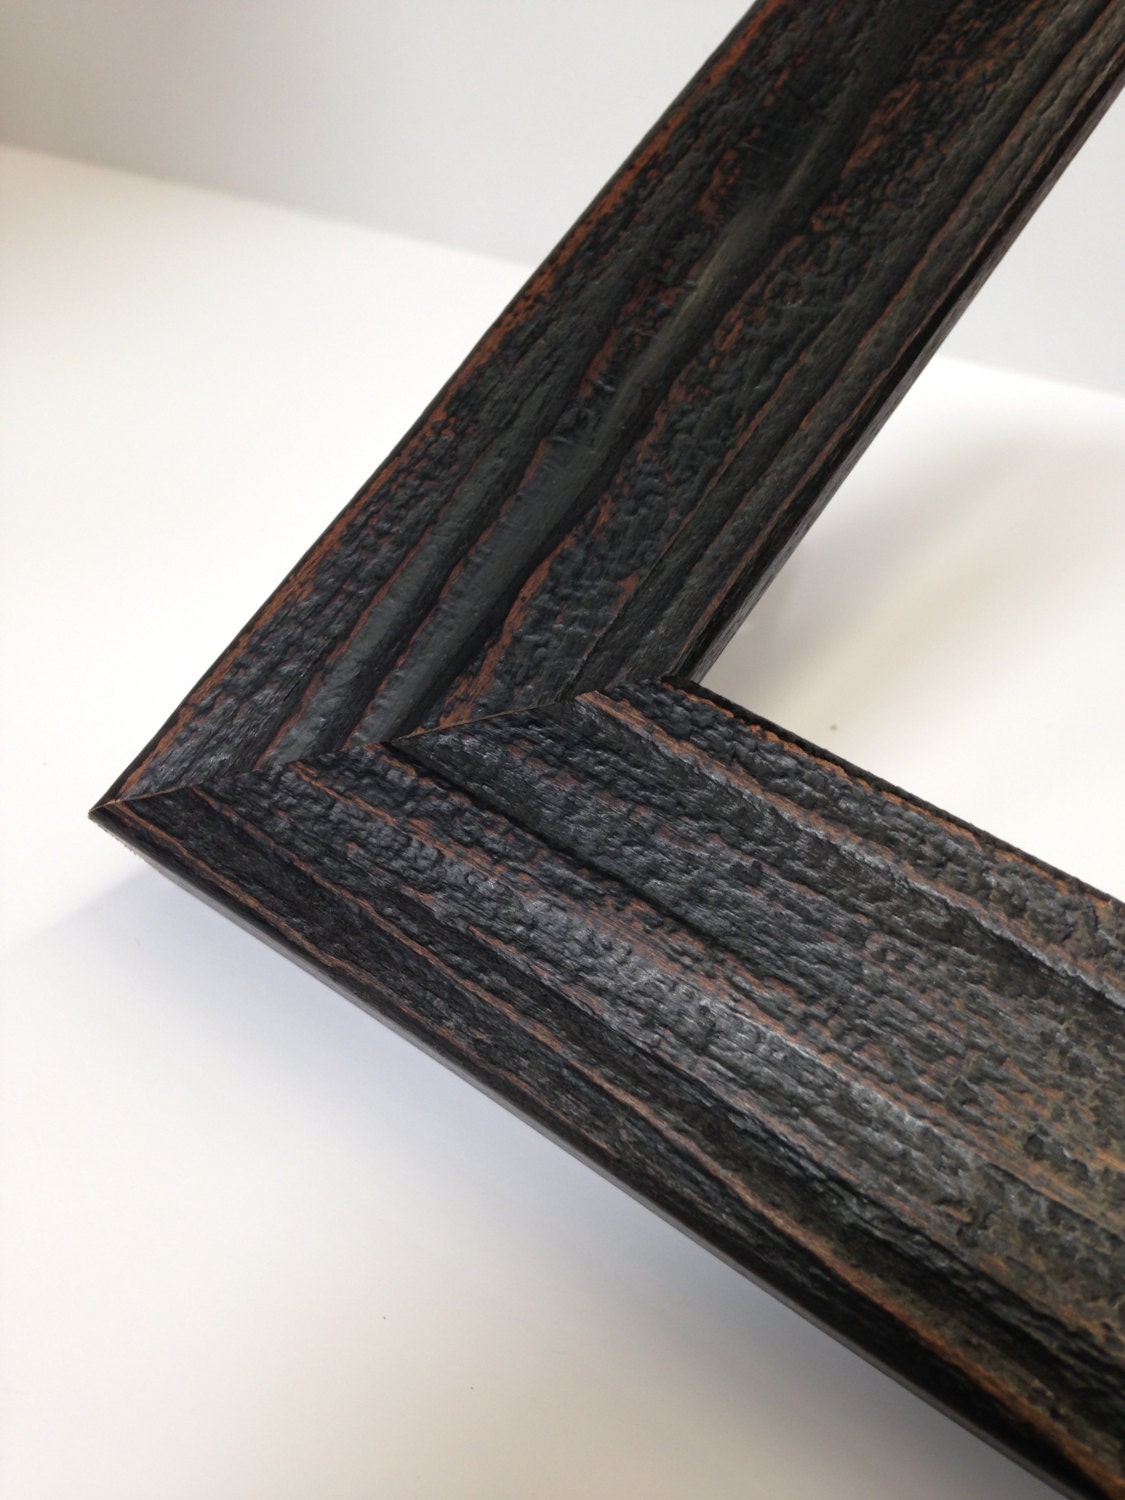 Black Rustic Wood Picture Frame. Barn Wood Frame